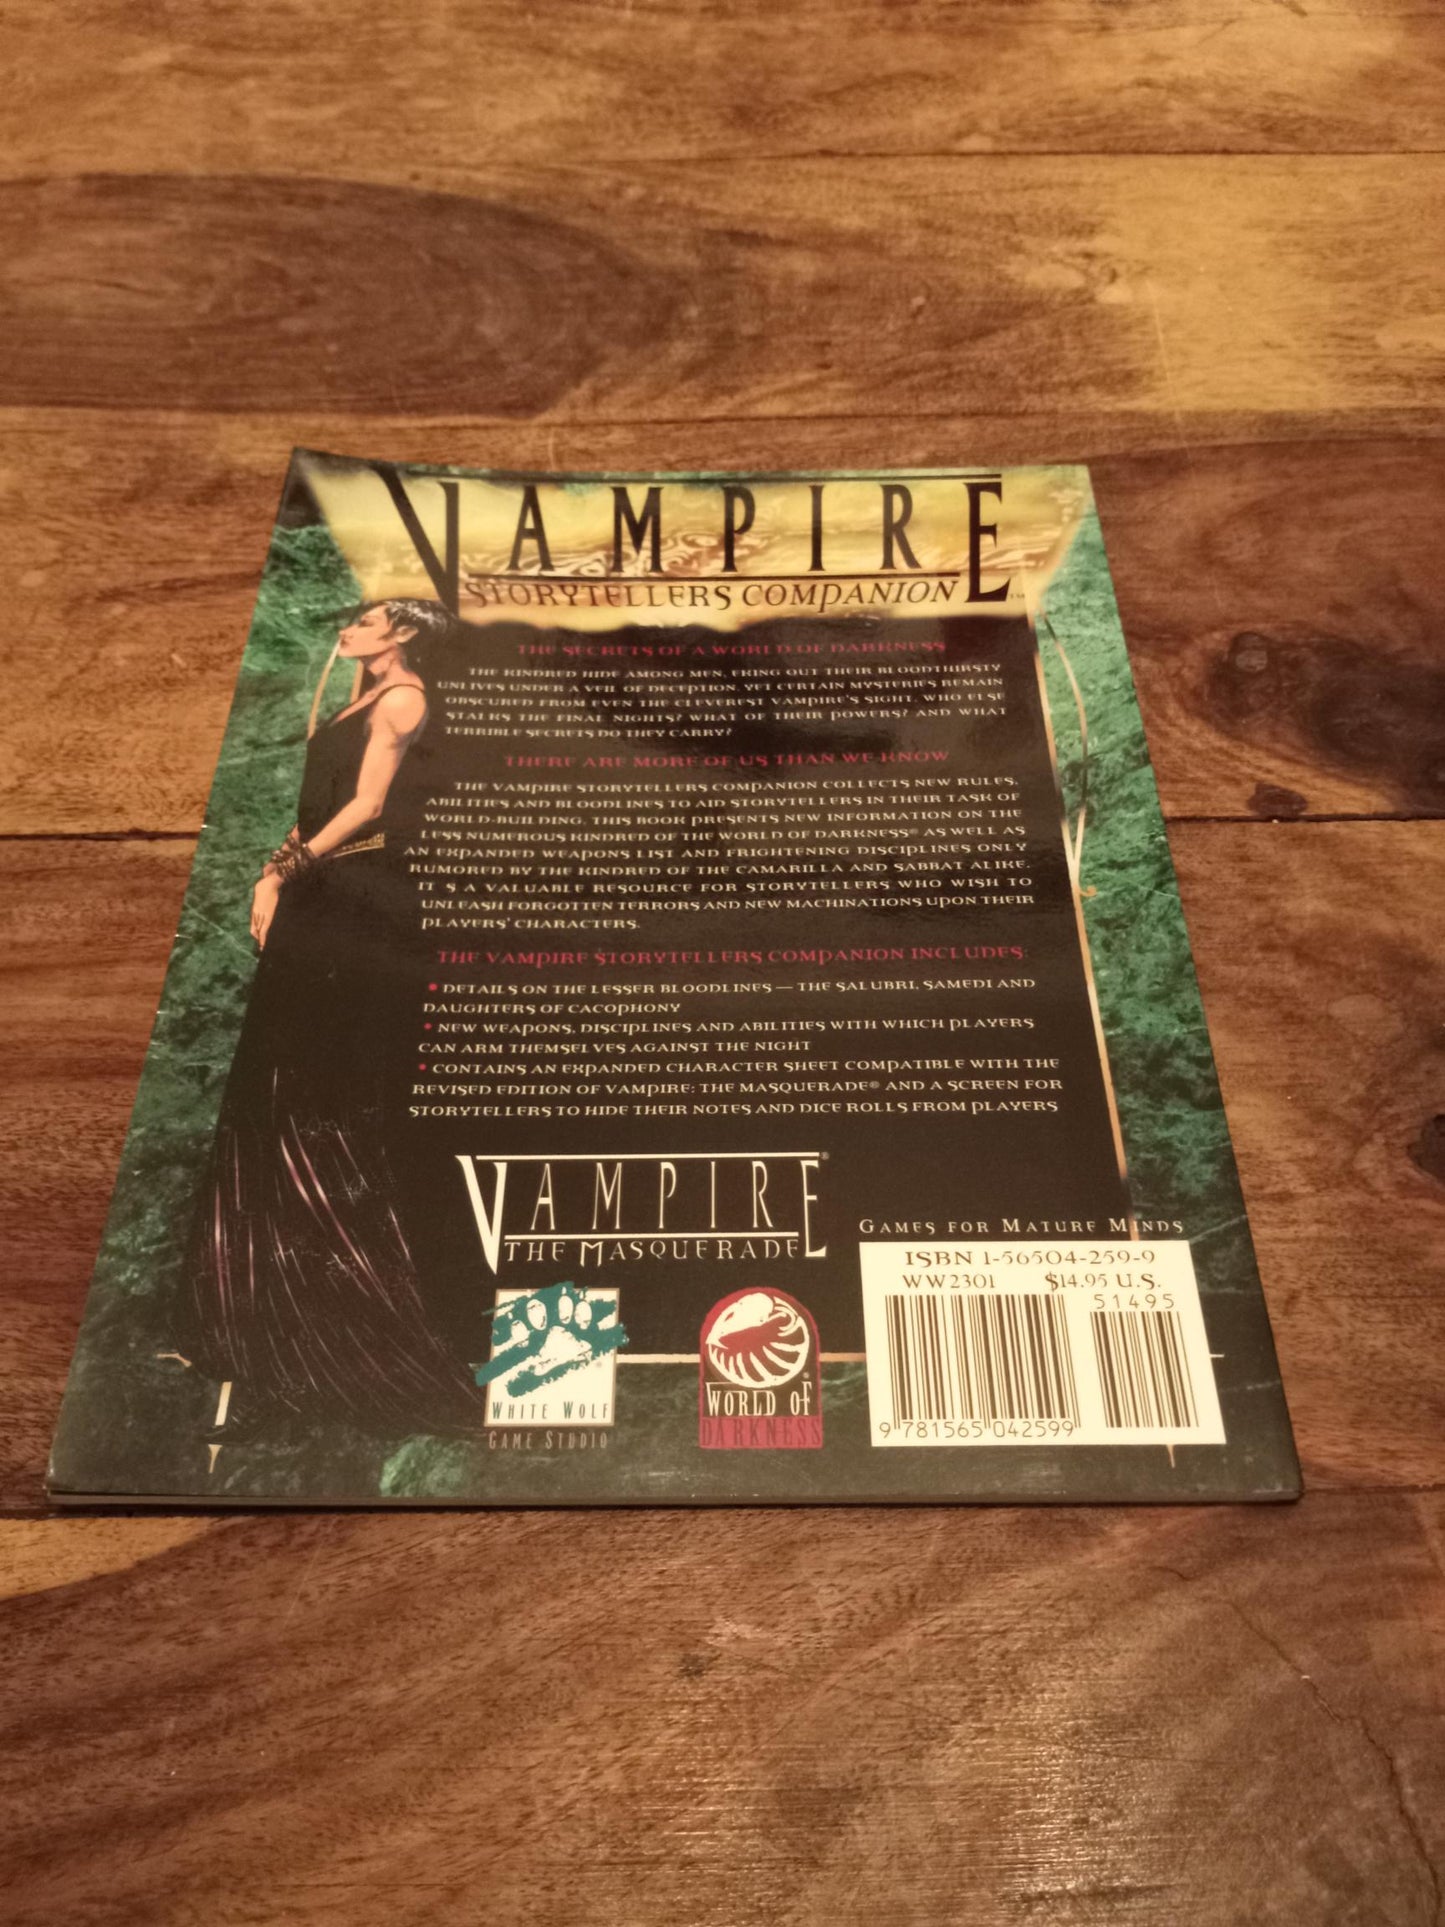 Vampire The Masquerade Storytellers Companion White Wolf 1998